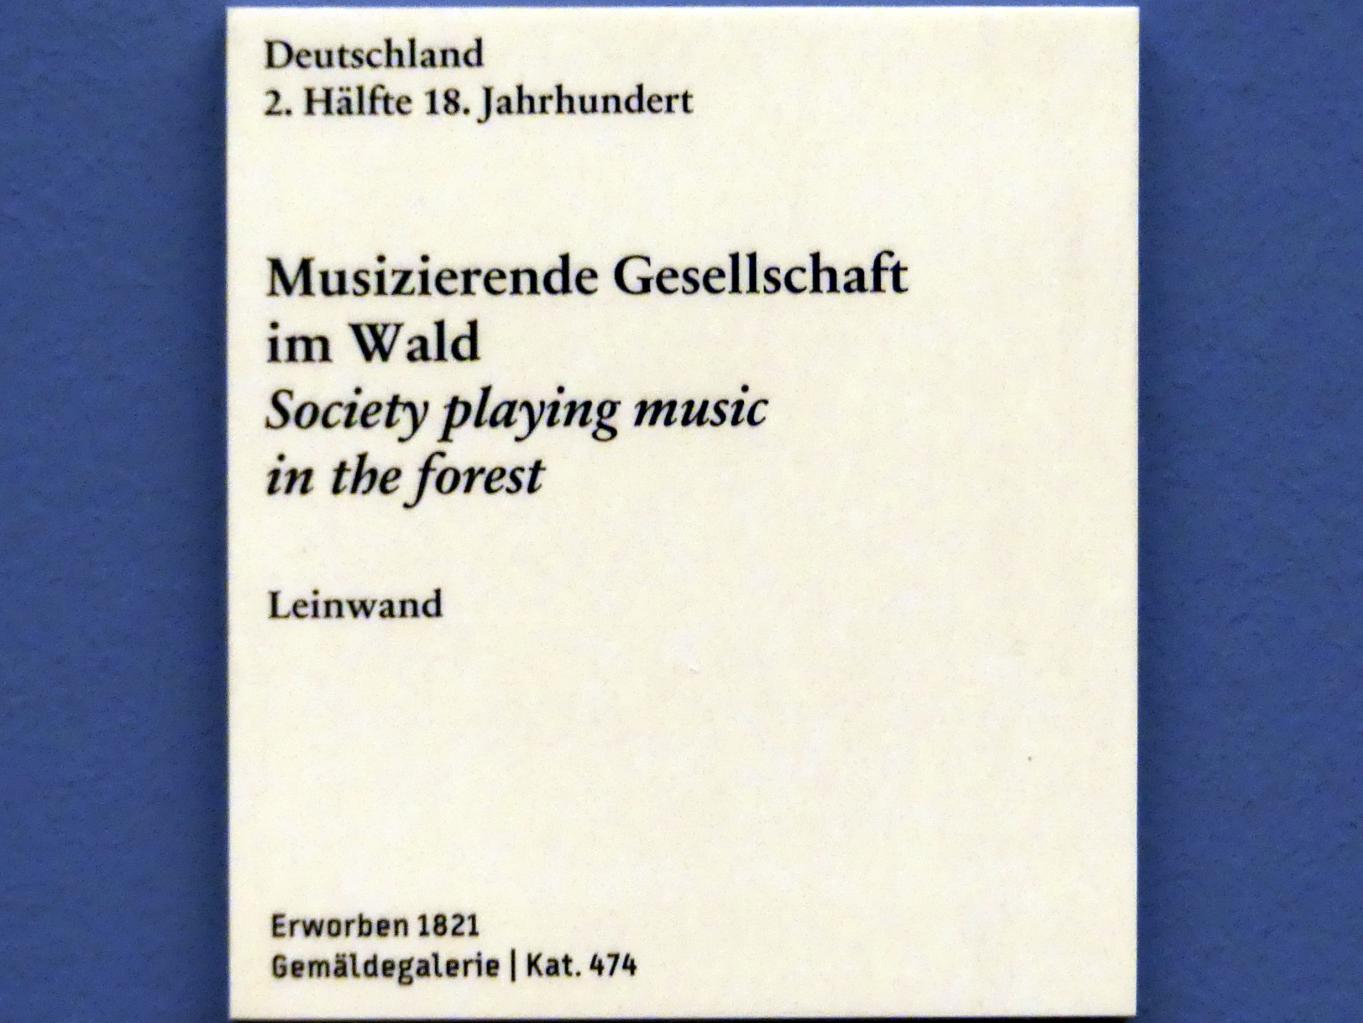 Musizierende Gesellschaft im Wald, Berlin, Bode-Museum, Saal 257, 2. Hälfte 18. Jhd., Bild 2/2